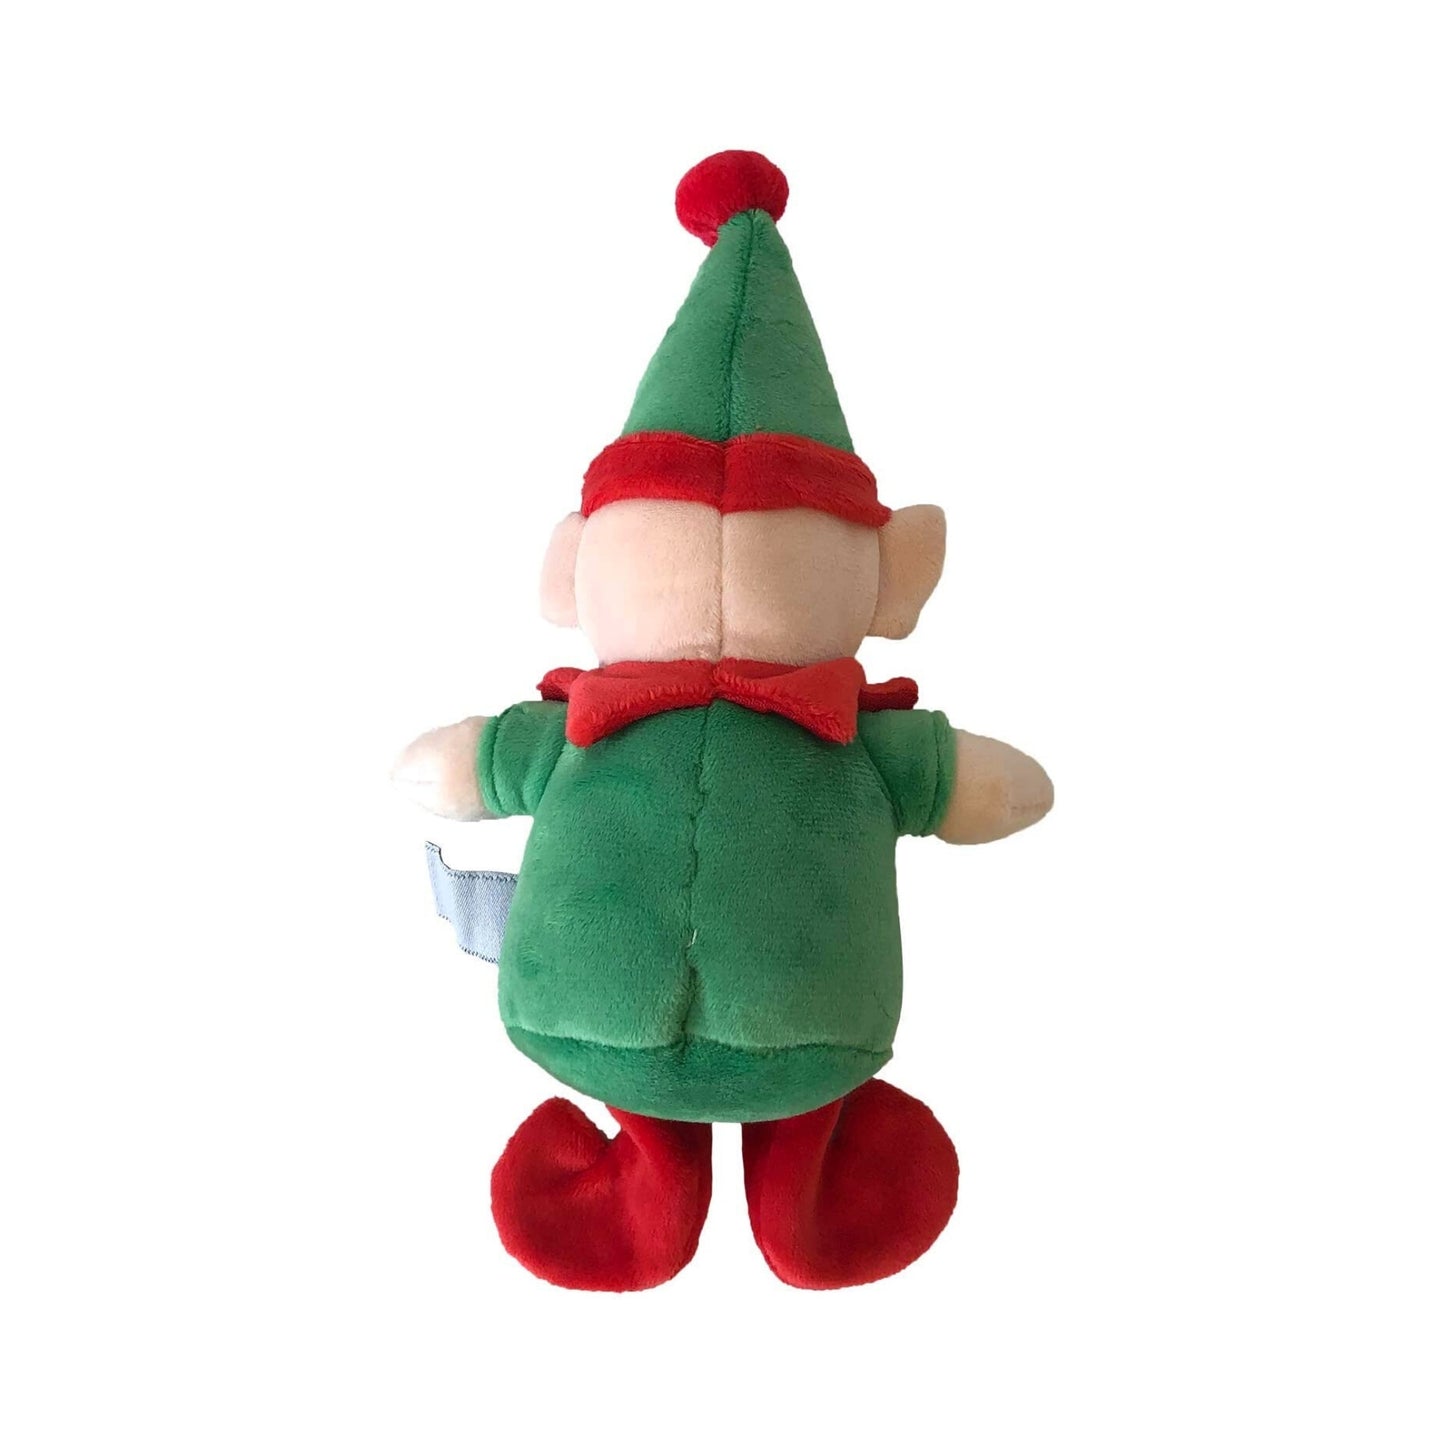 Midlee Christmas Elf Plush Dog Toy